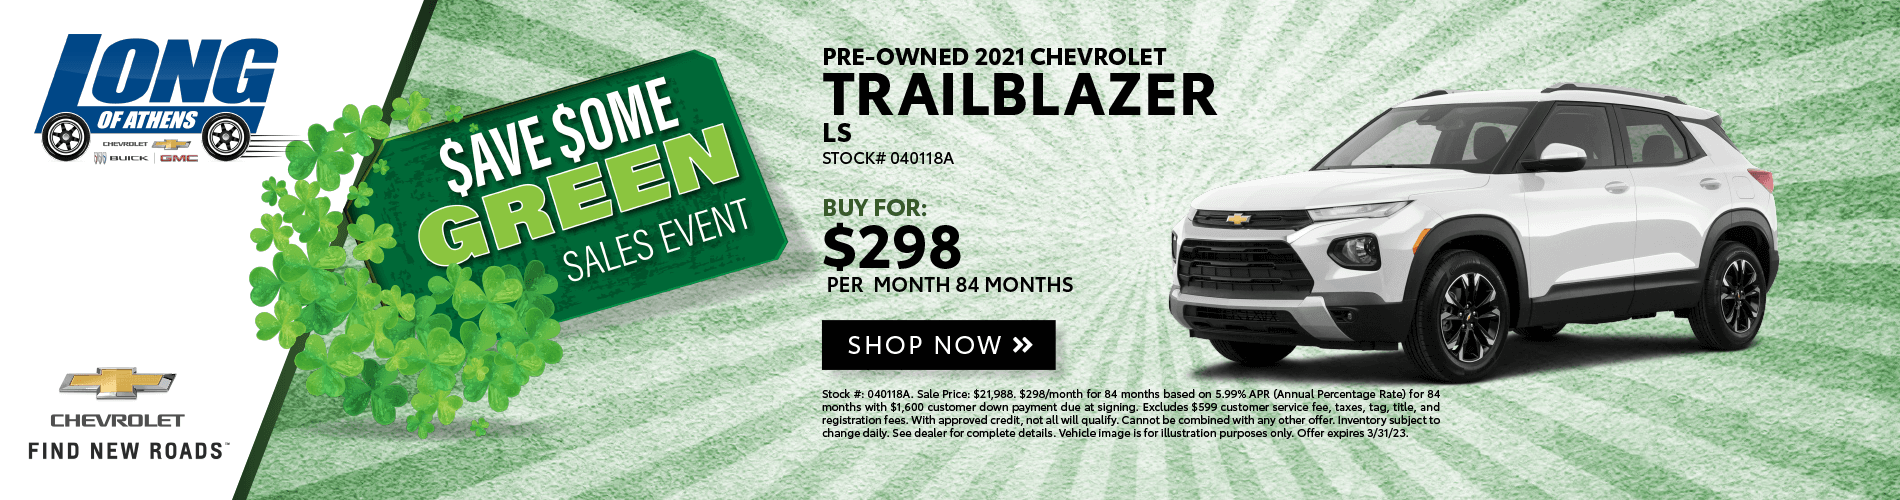 2021 Chevy Trailblazer